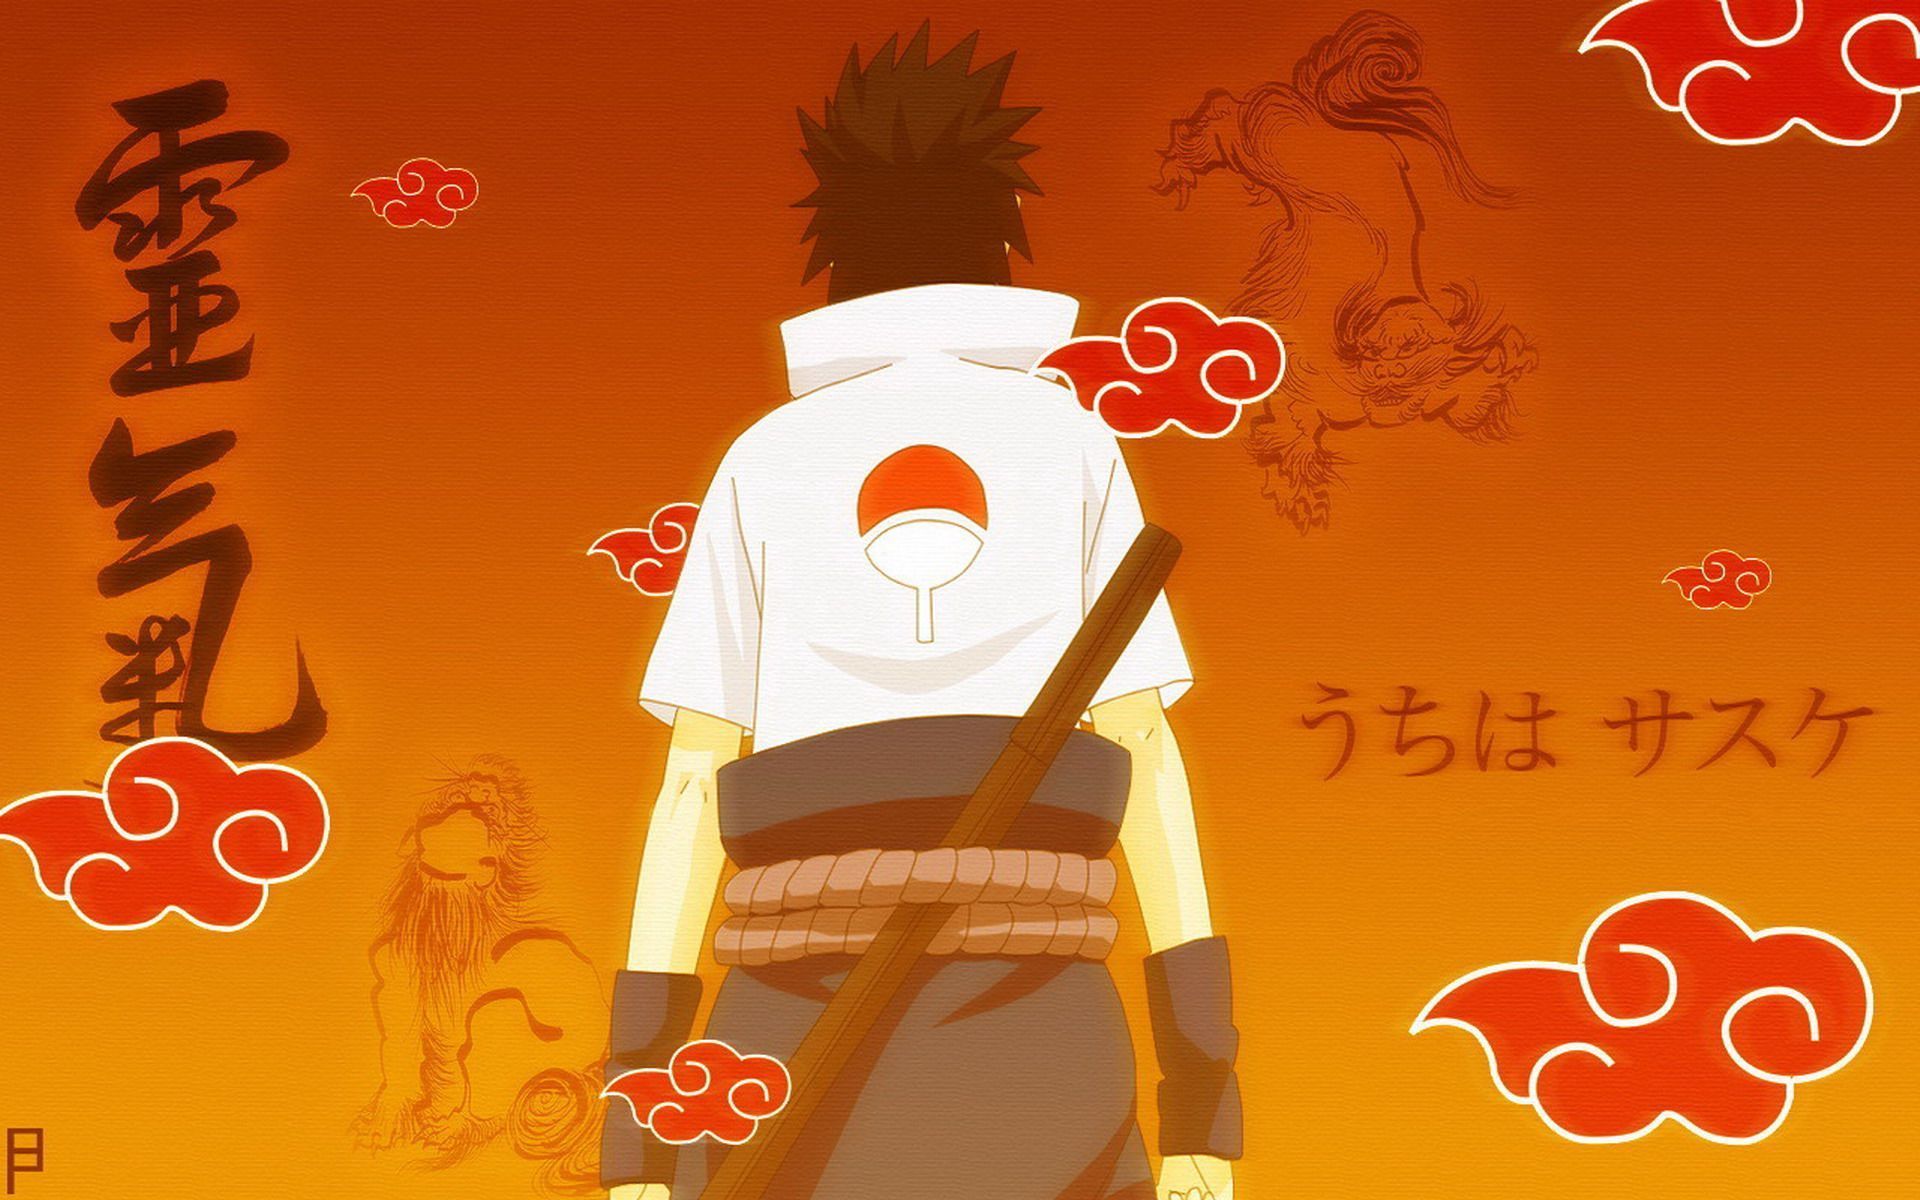 A man with anime style clothing and holding two swords - Sasuke Uchiha